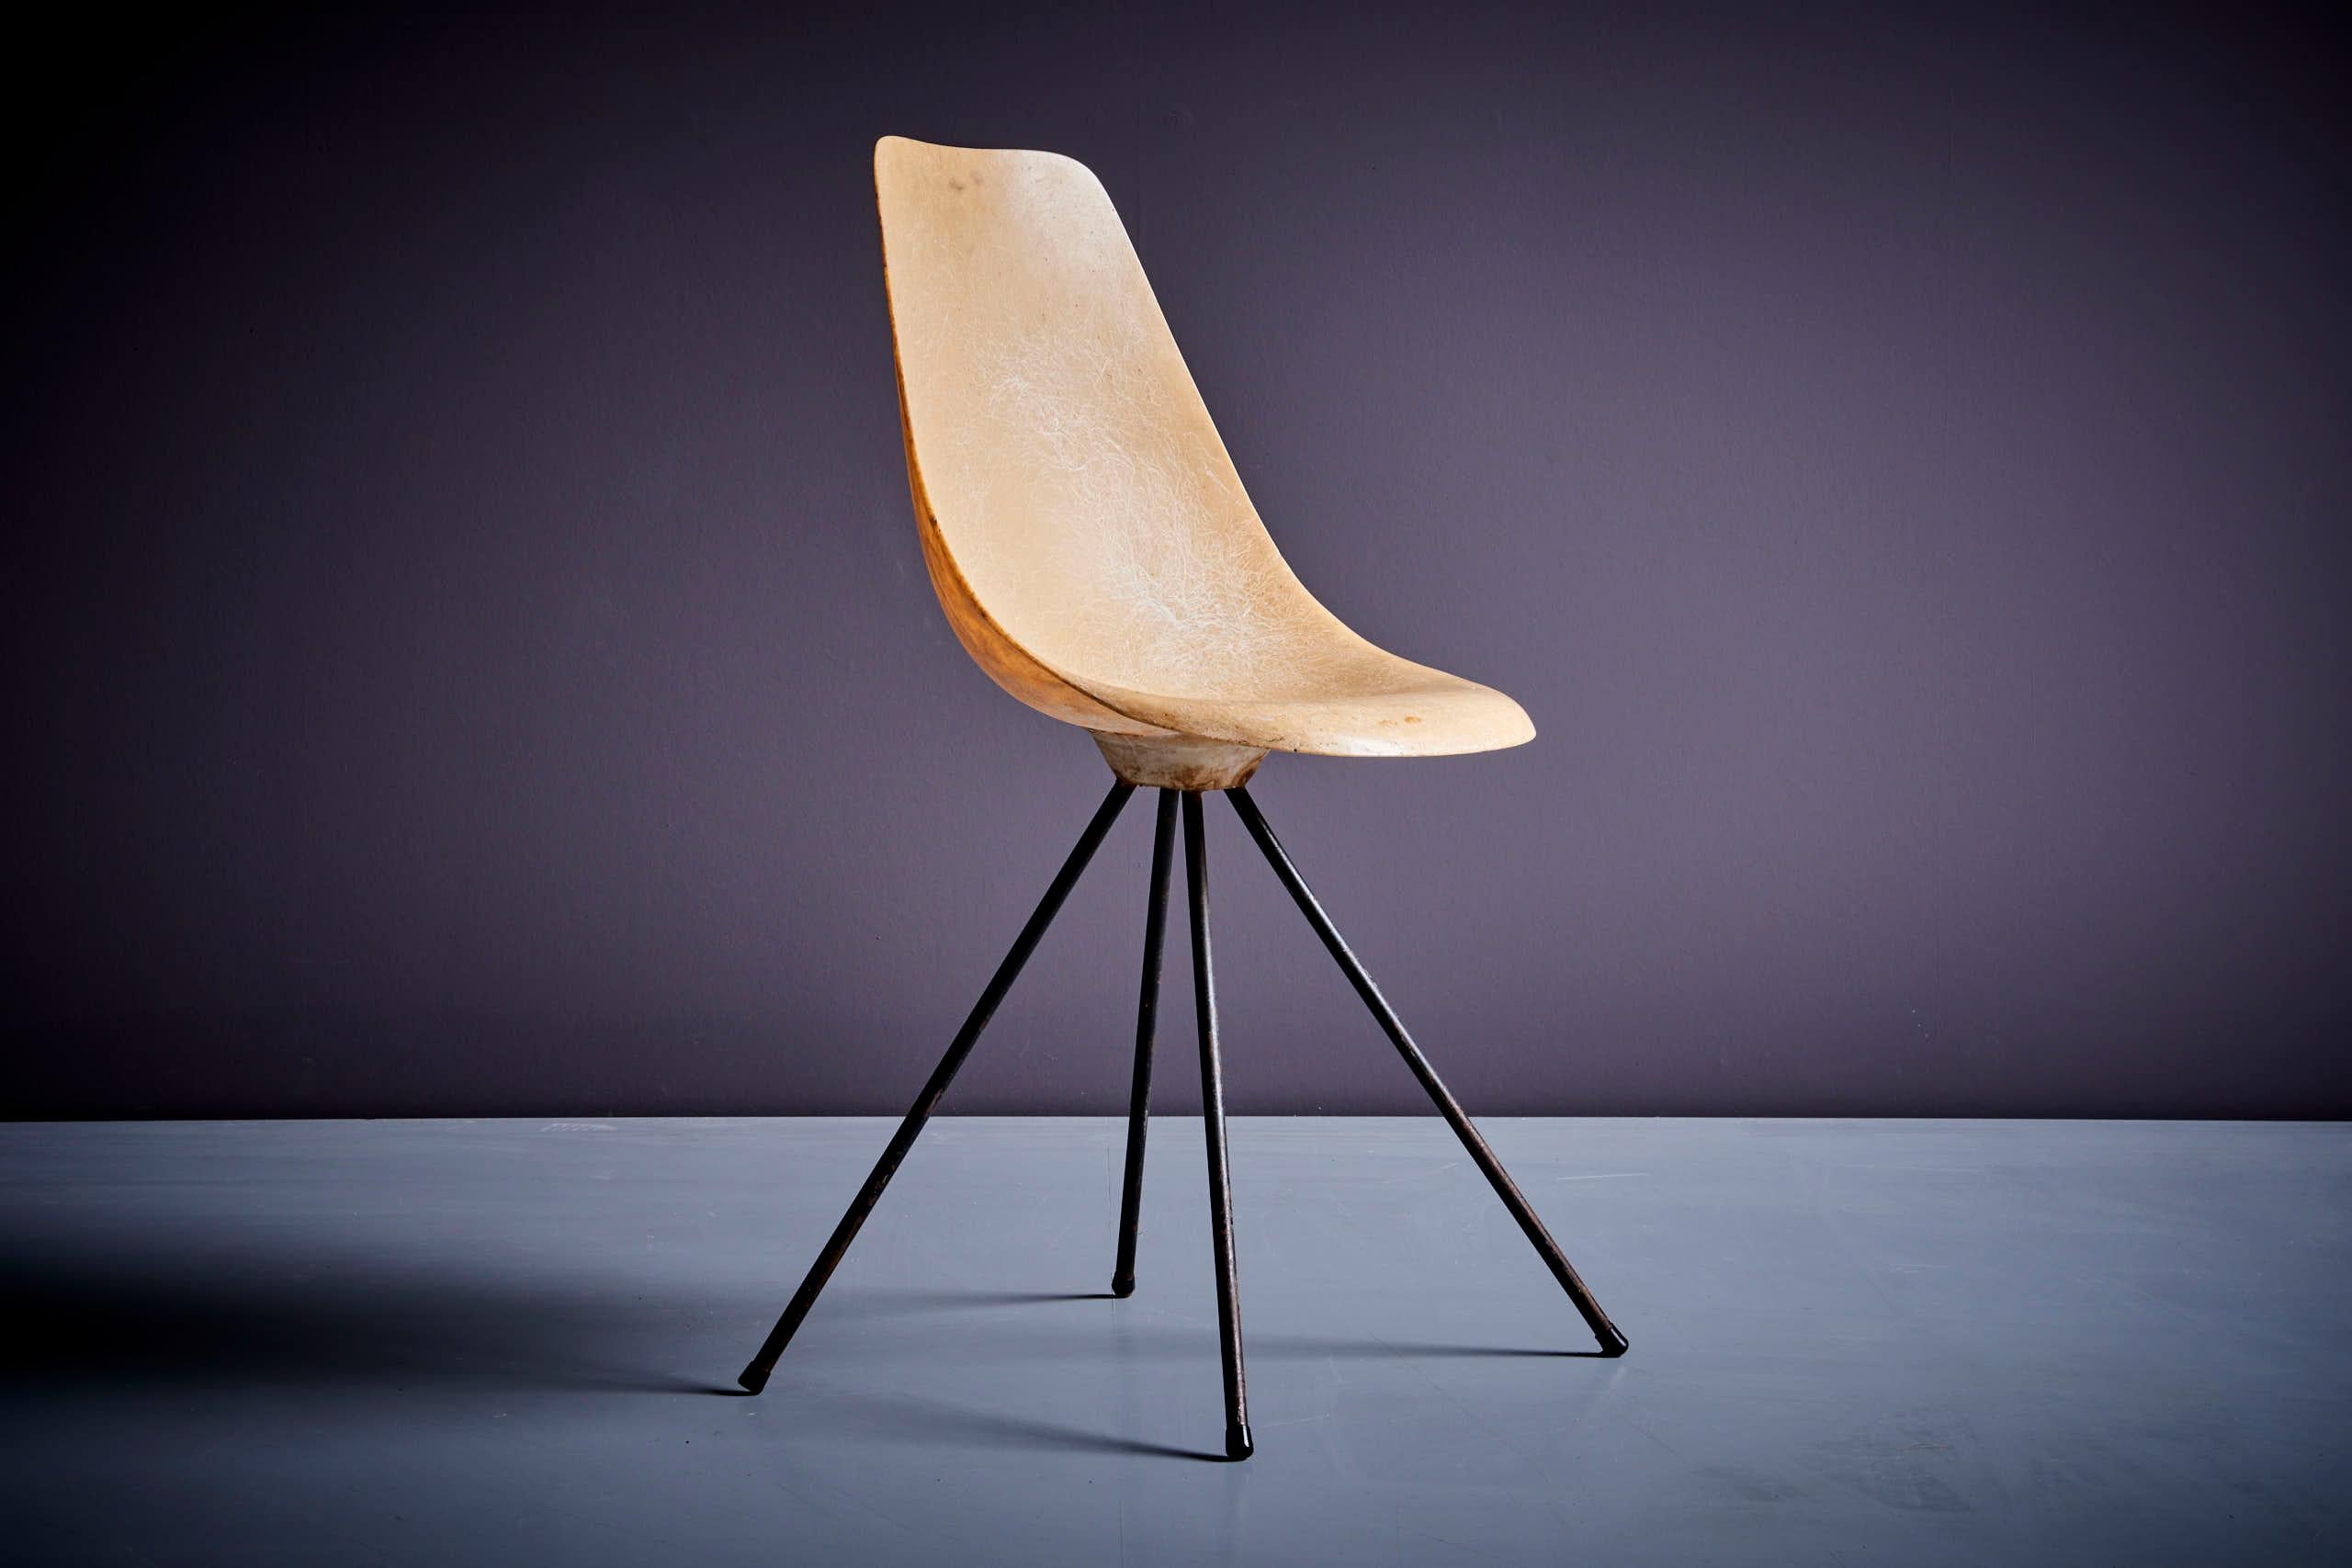 Jean-René Picard for S.E.T.A Fiberglass Chair, 1950s.